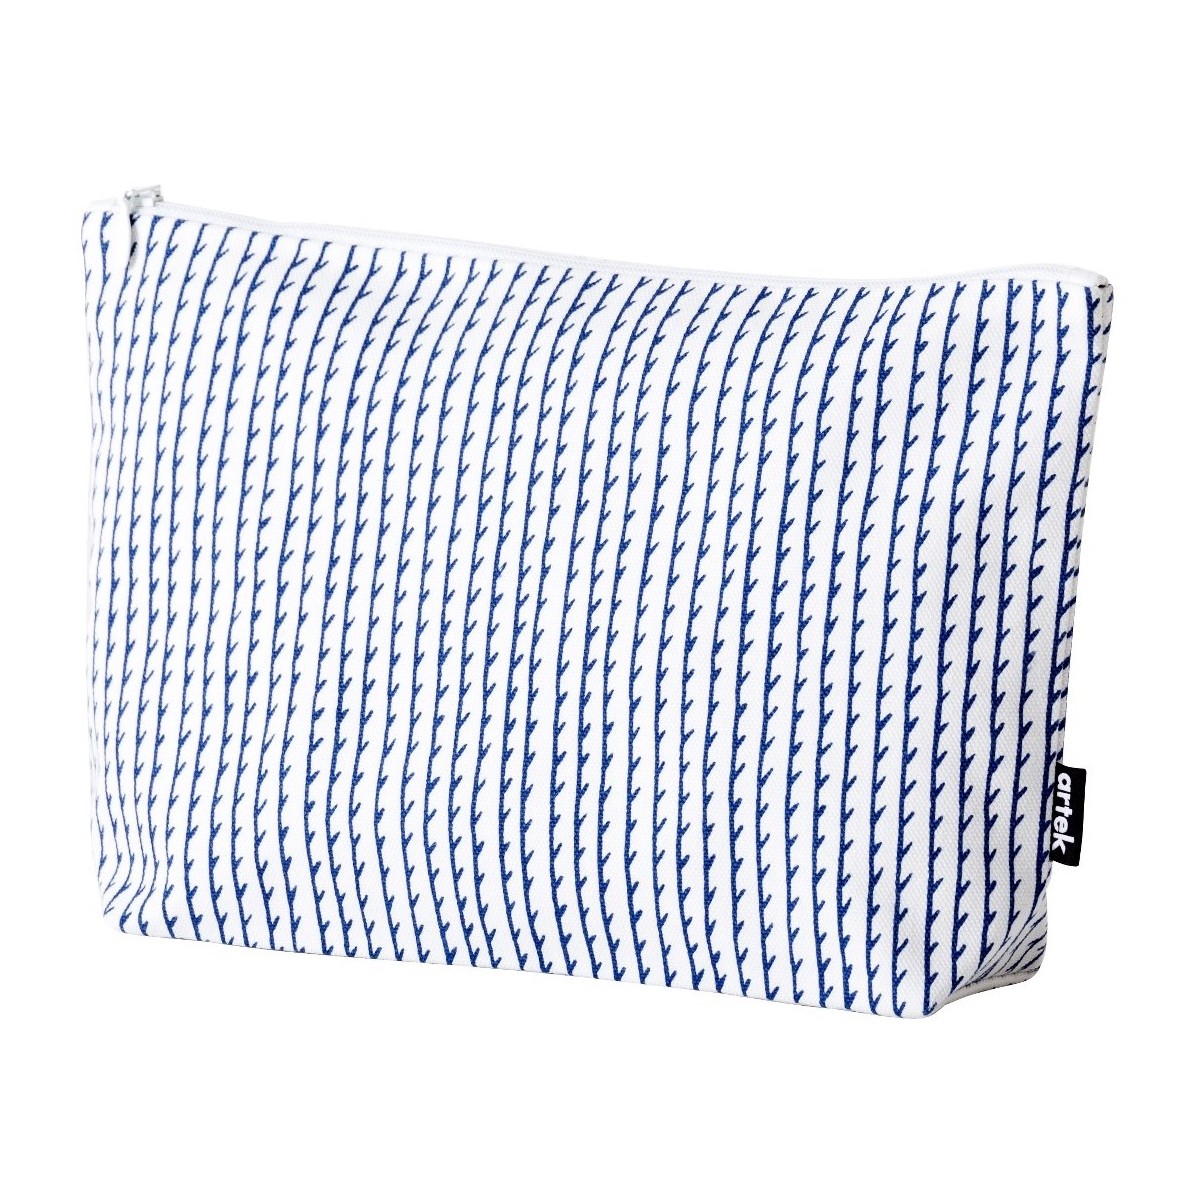 29x18,5cm - white / blue - pouch - Rivi